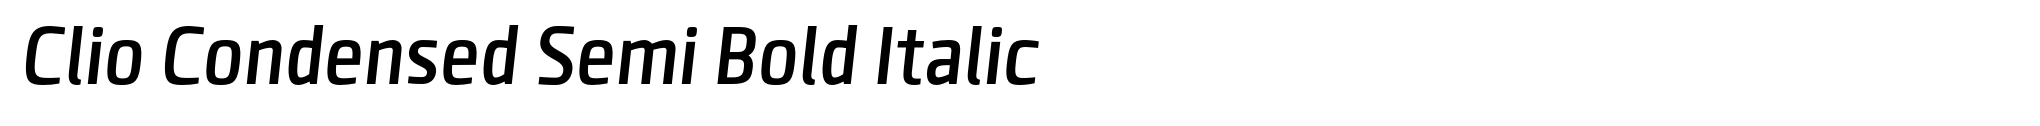 Clio Condensed Semi Bold Italic image